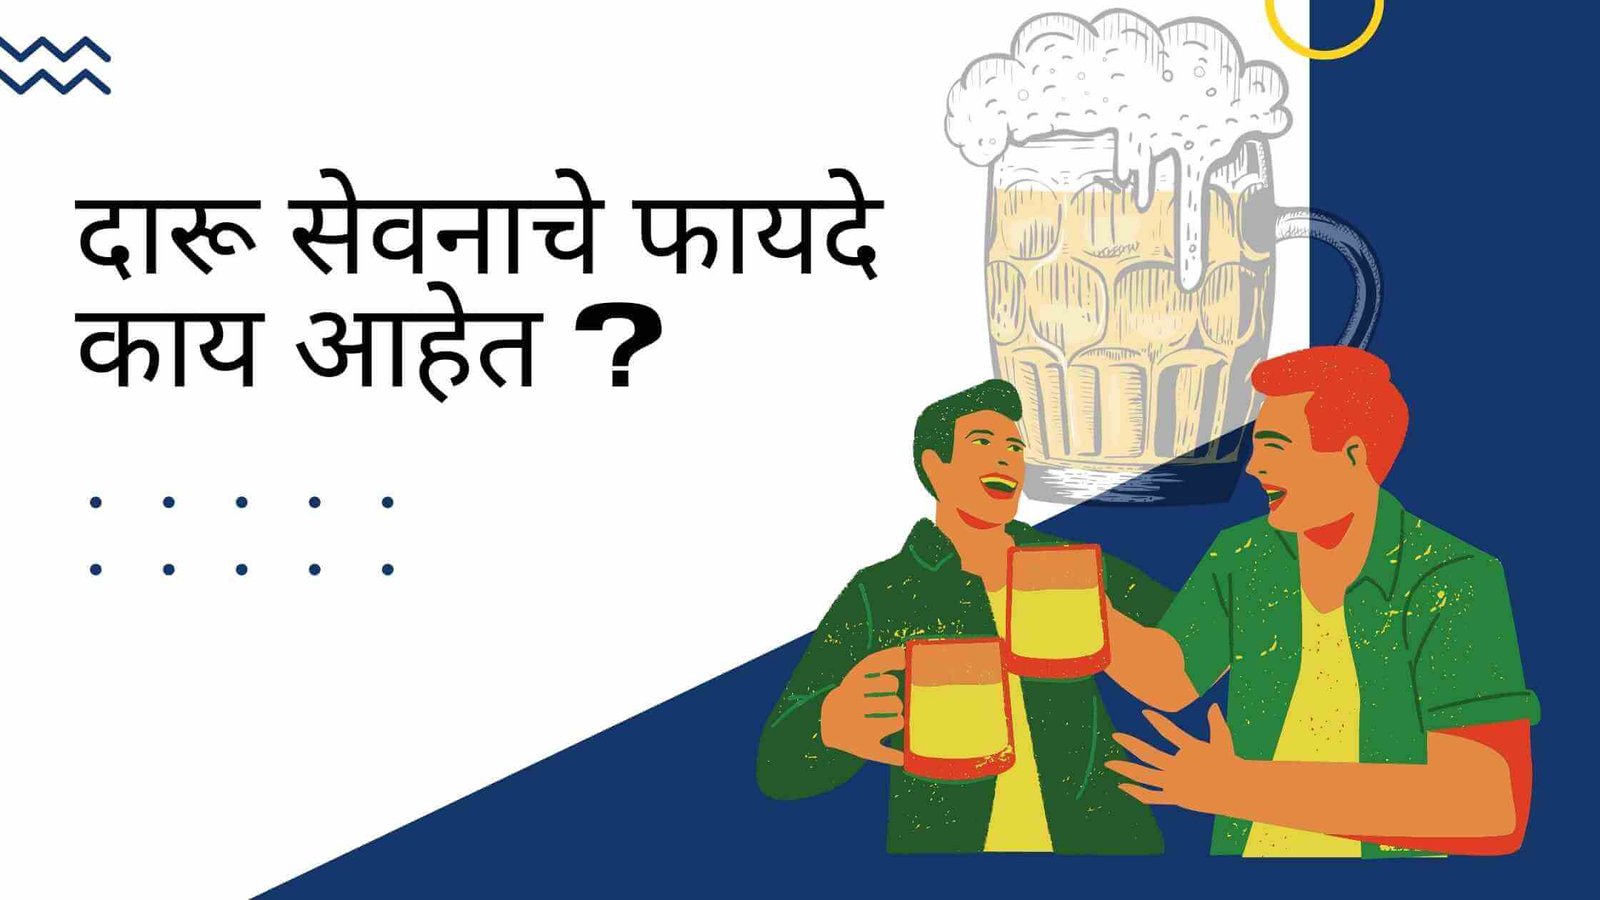 दारू पिण्याचे फायदे | Benefits of Drinking Alcohol in Marathi